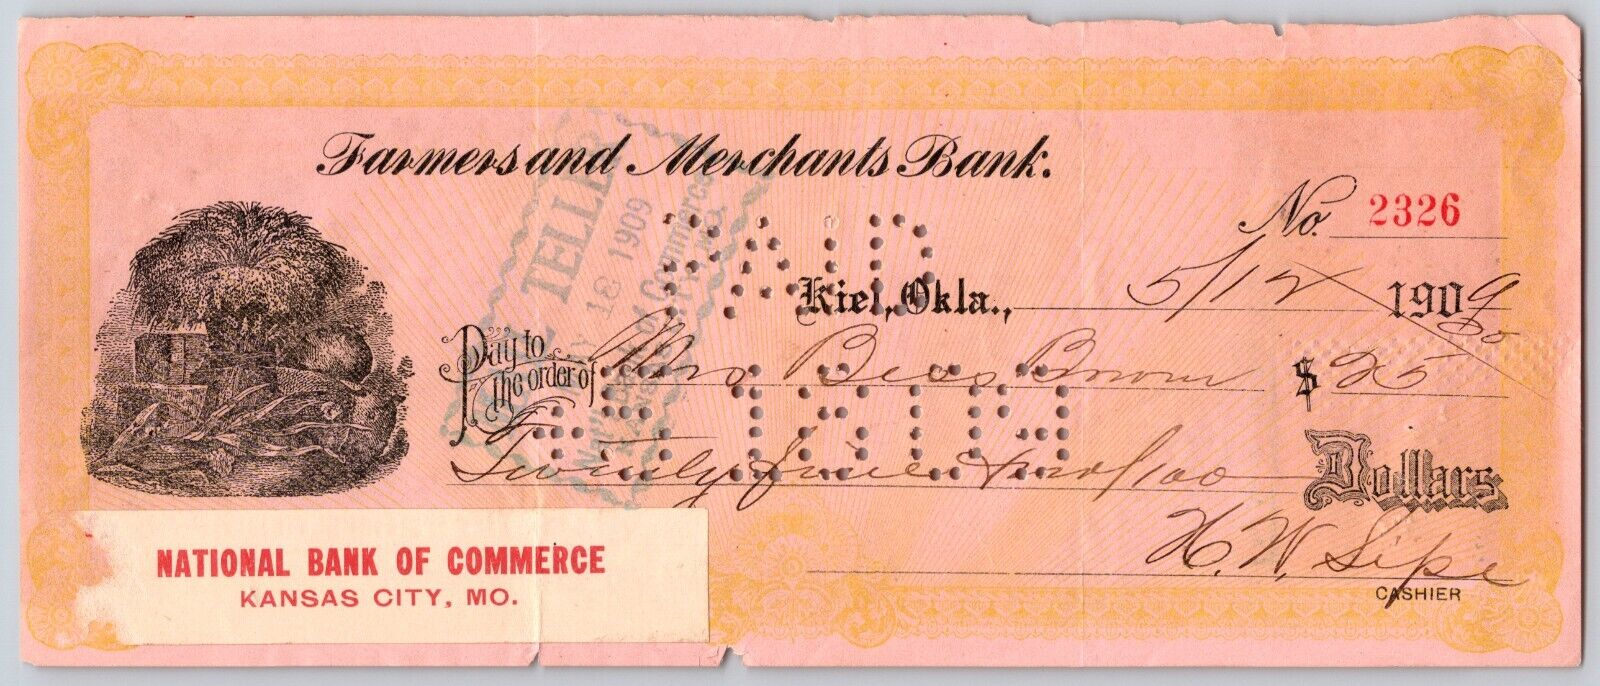 Kiel, Oklahoma 1909 Farmers and Merchants Bank Check w/ Vignette - Scarce